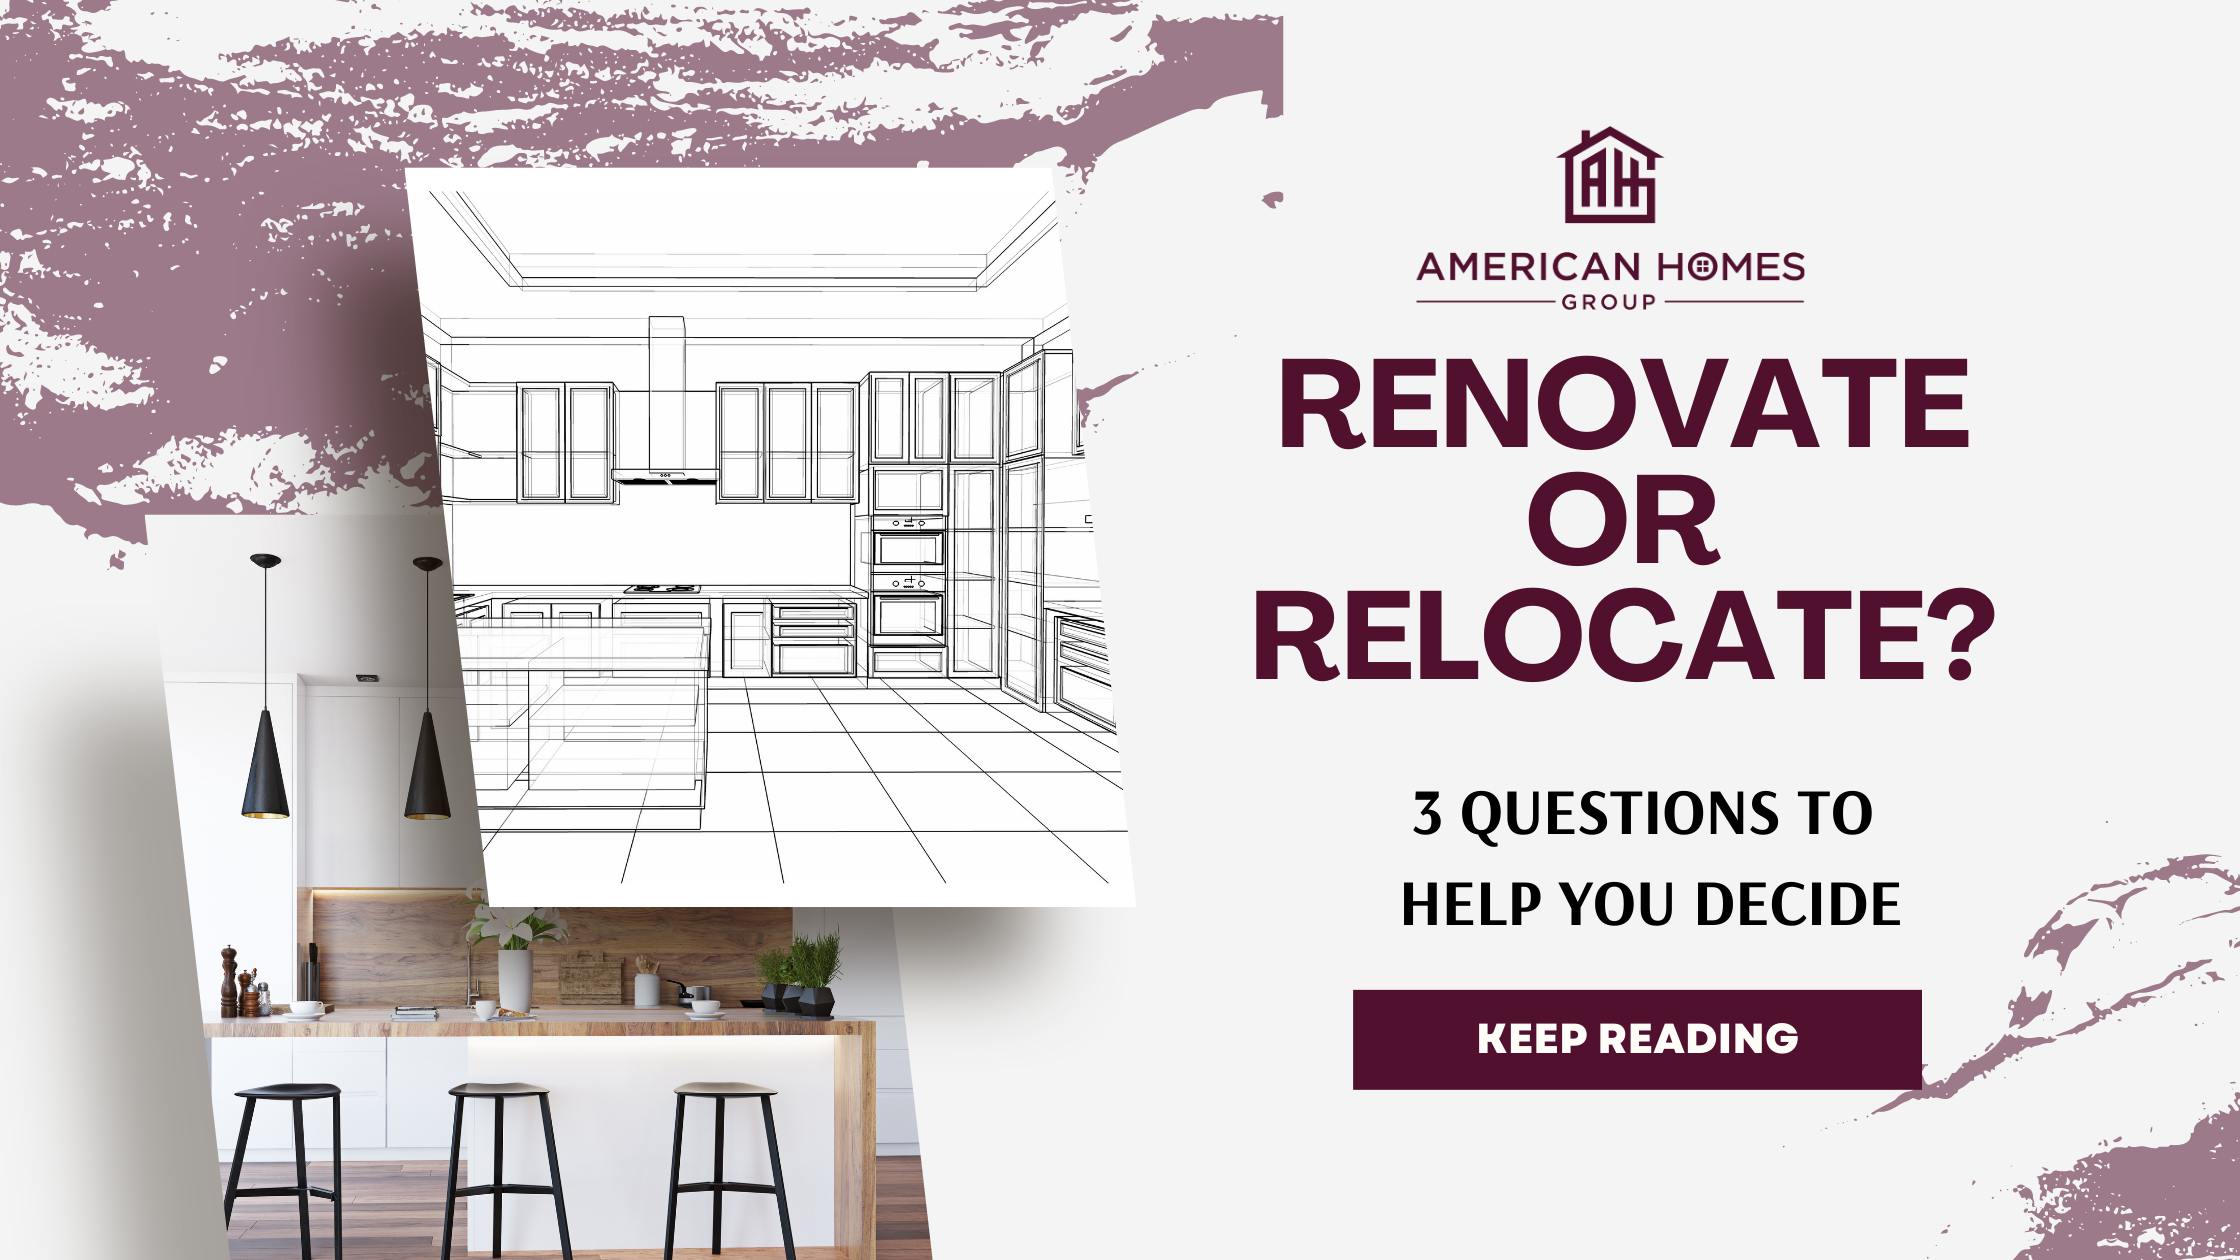 Renovate or Relocate